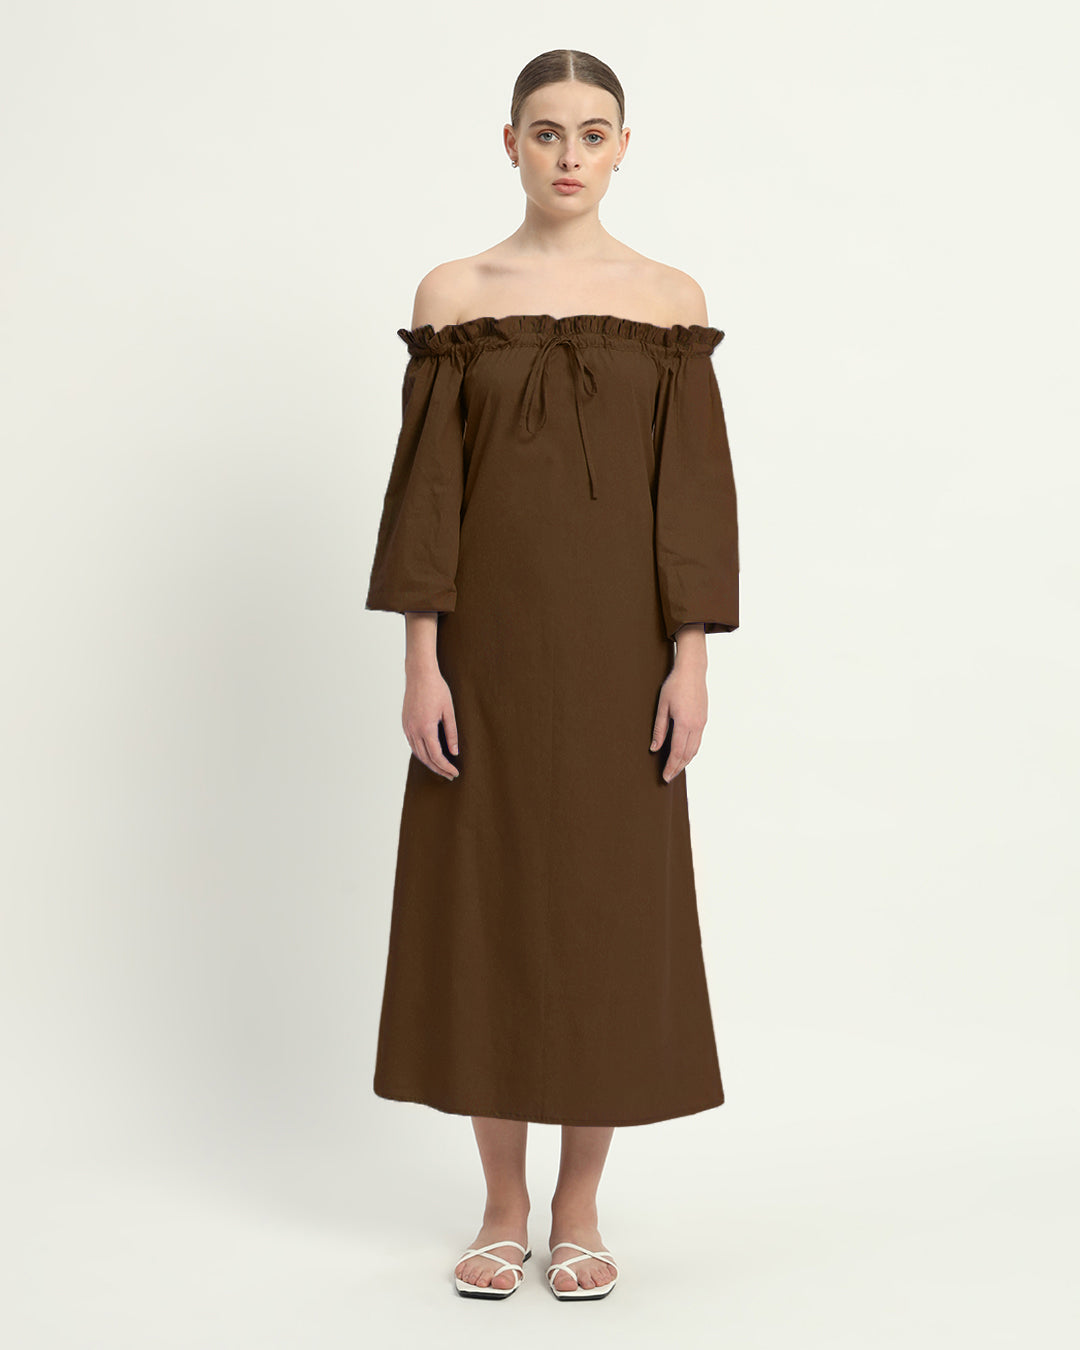 The Nutshell Carlisle Cotton Dress